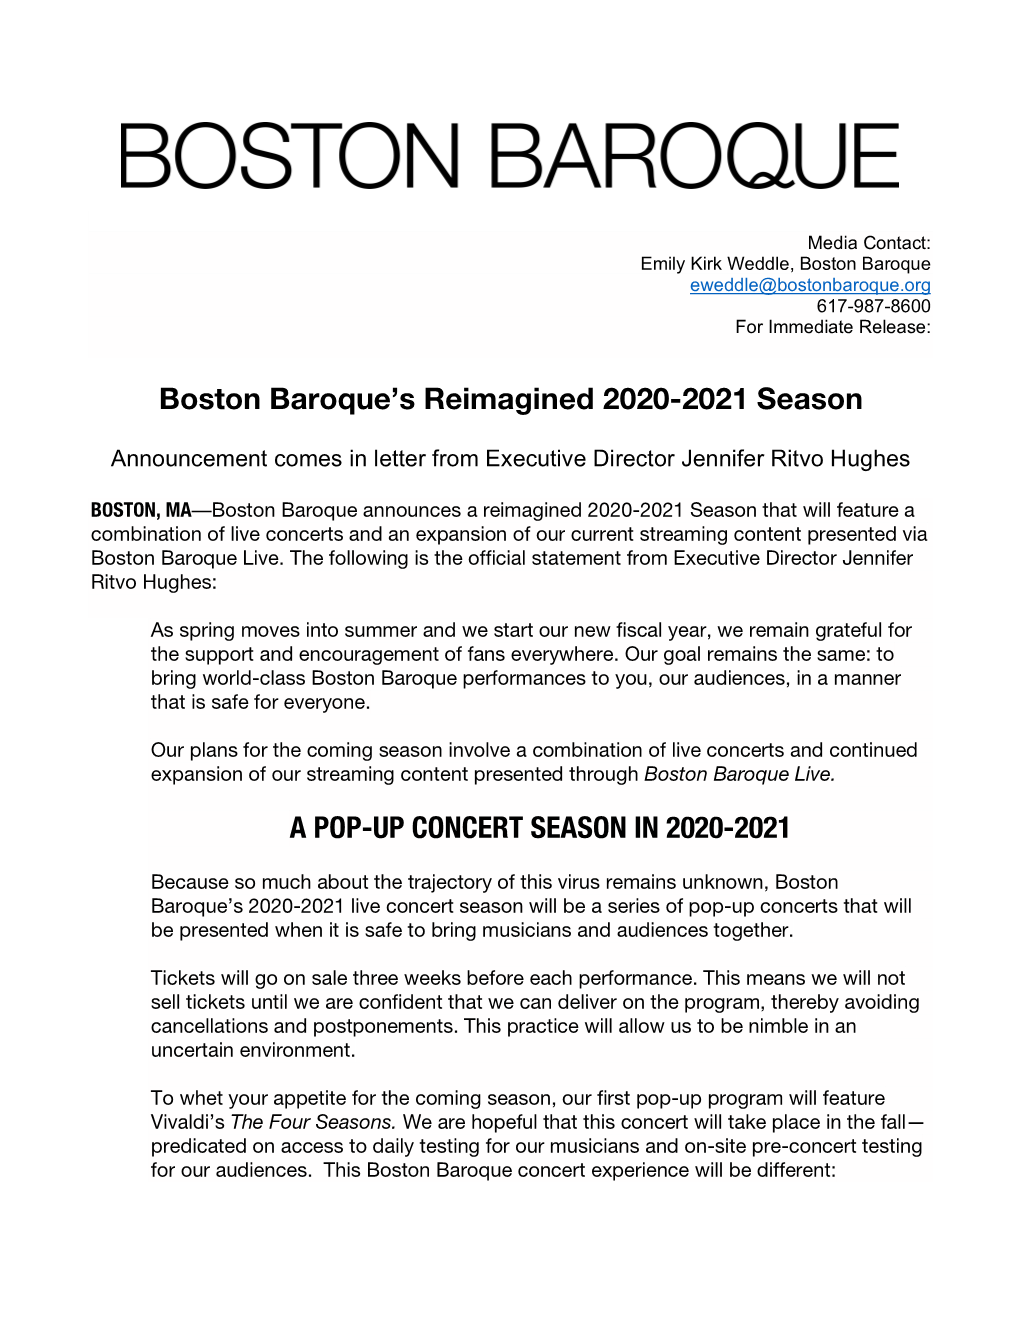 Boston Baroque's Reimagined 2020-2021 Season a POP-UP